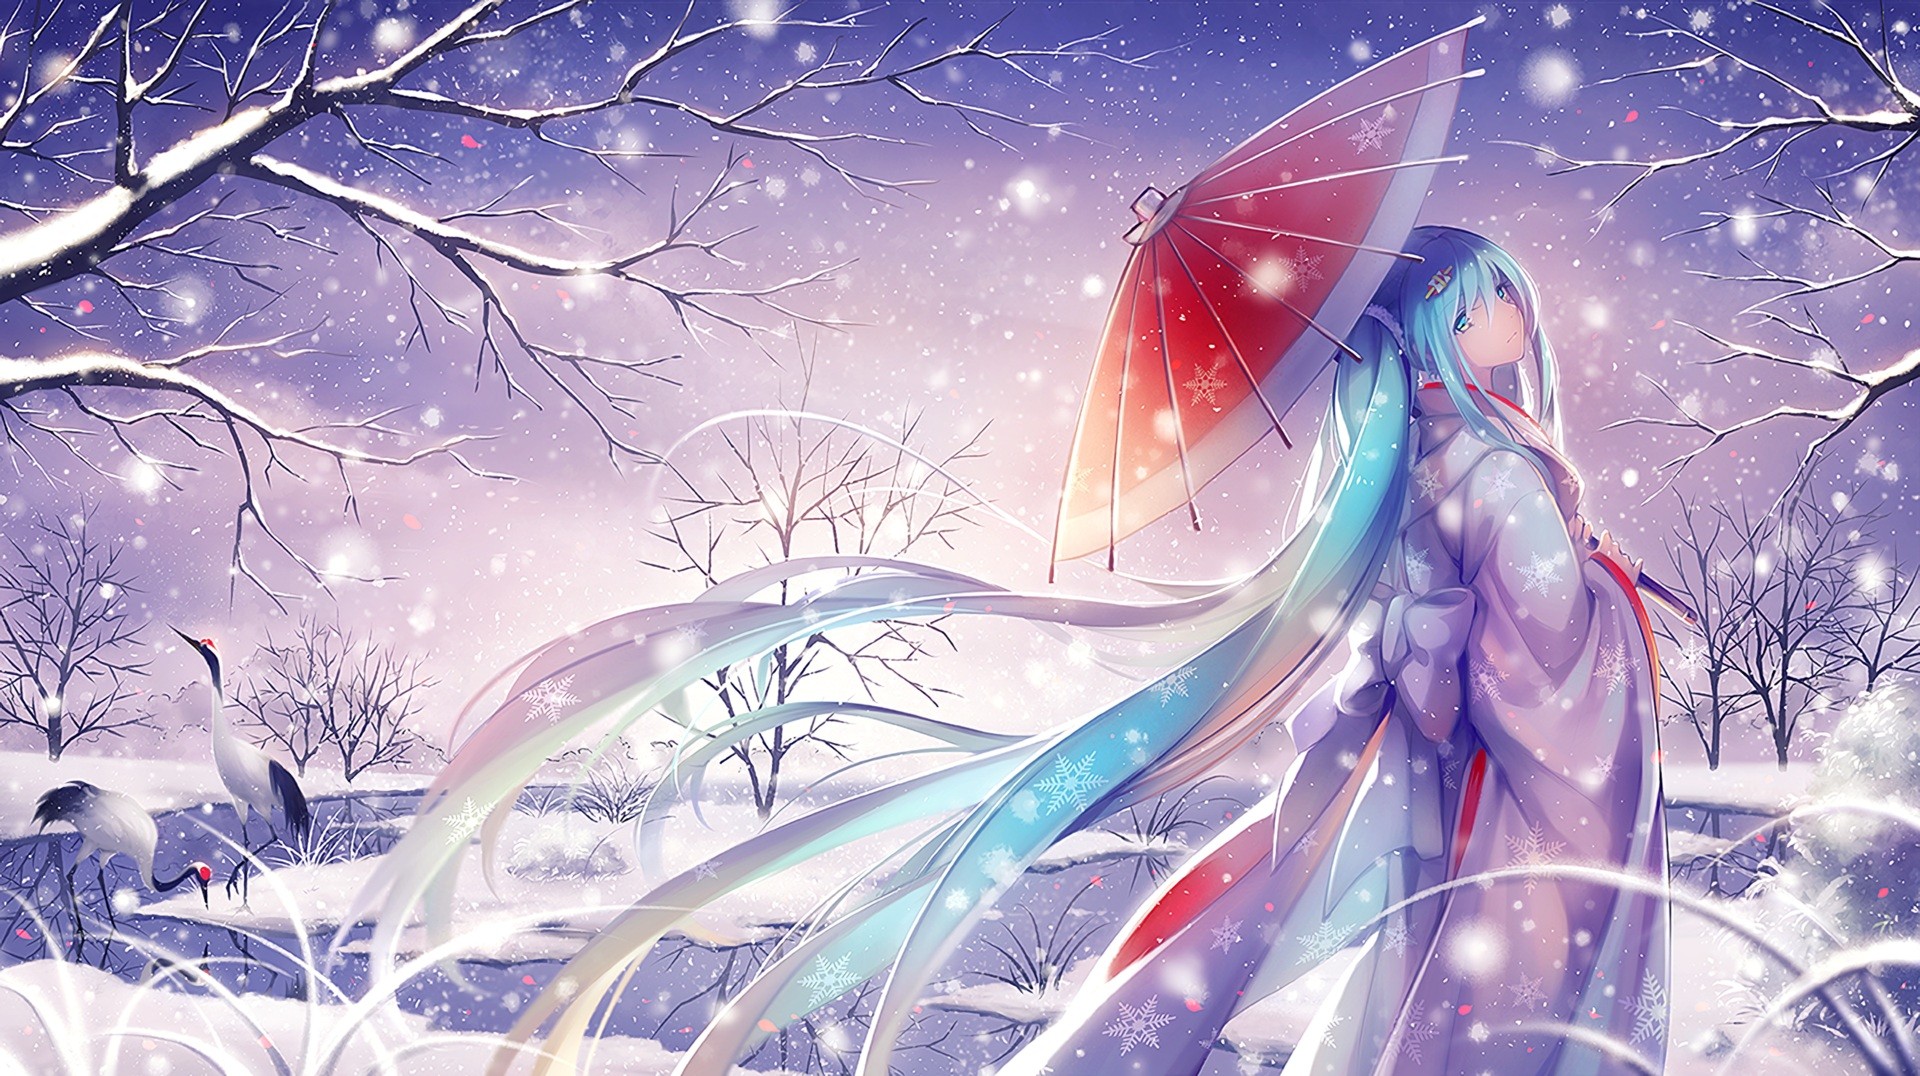 Anime 1920x1076 kimono anime girls anime winter snow women with umbrella umbrella cold outdoors women outdoors fantasy art fantasy girl cyan hair aqua eyes long hair